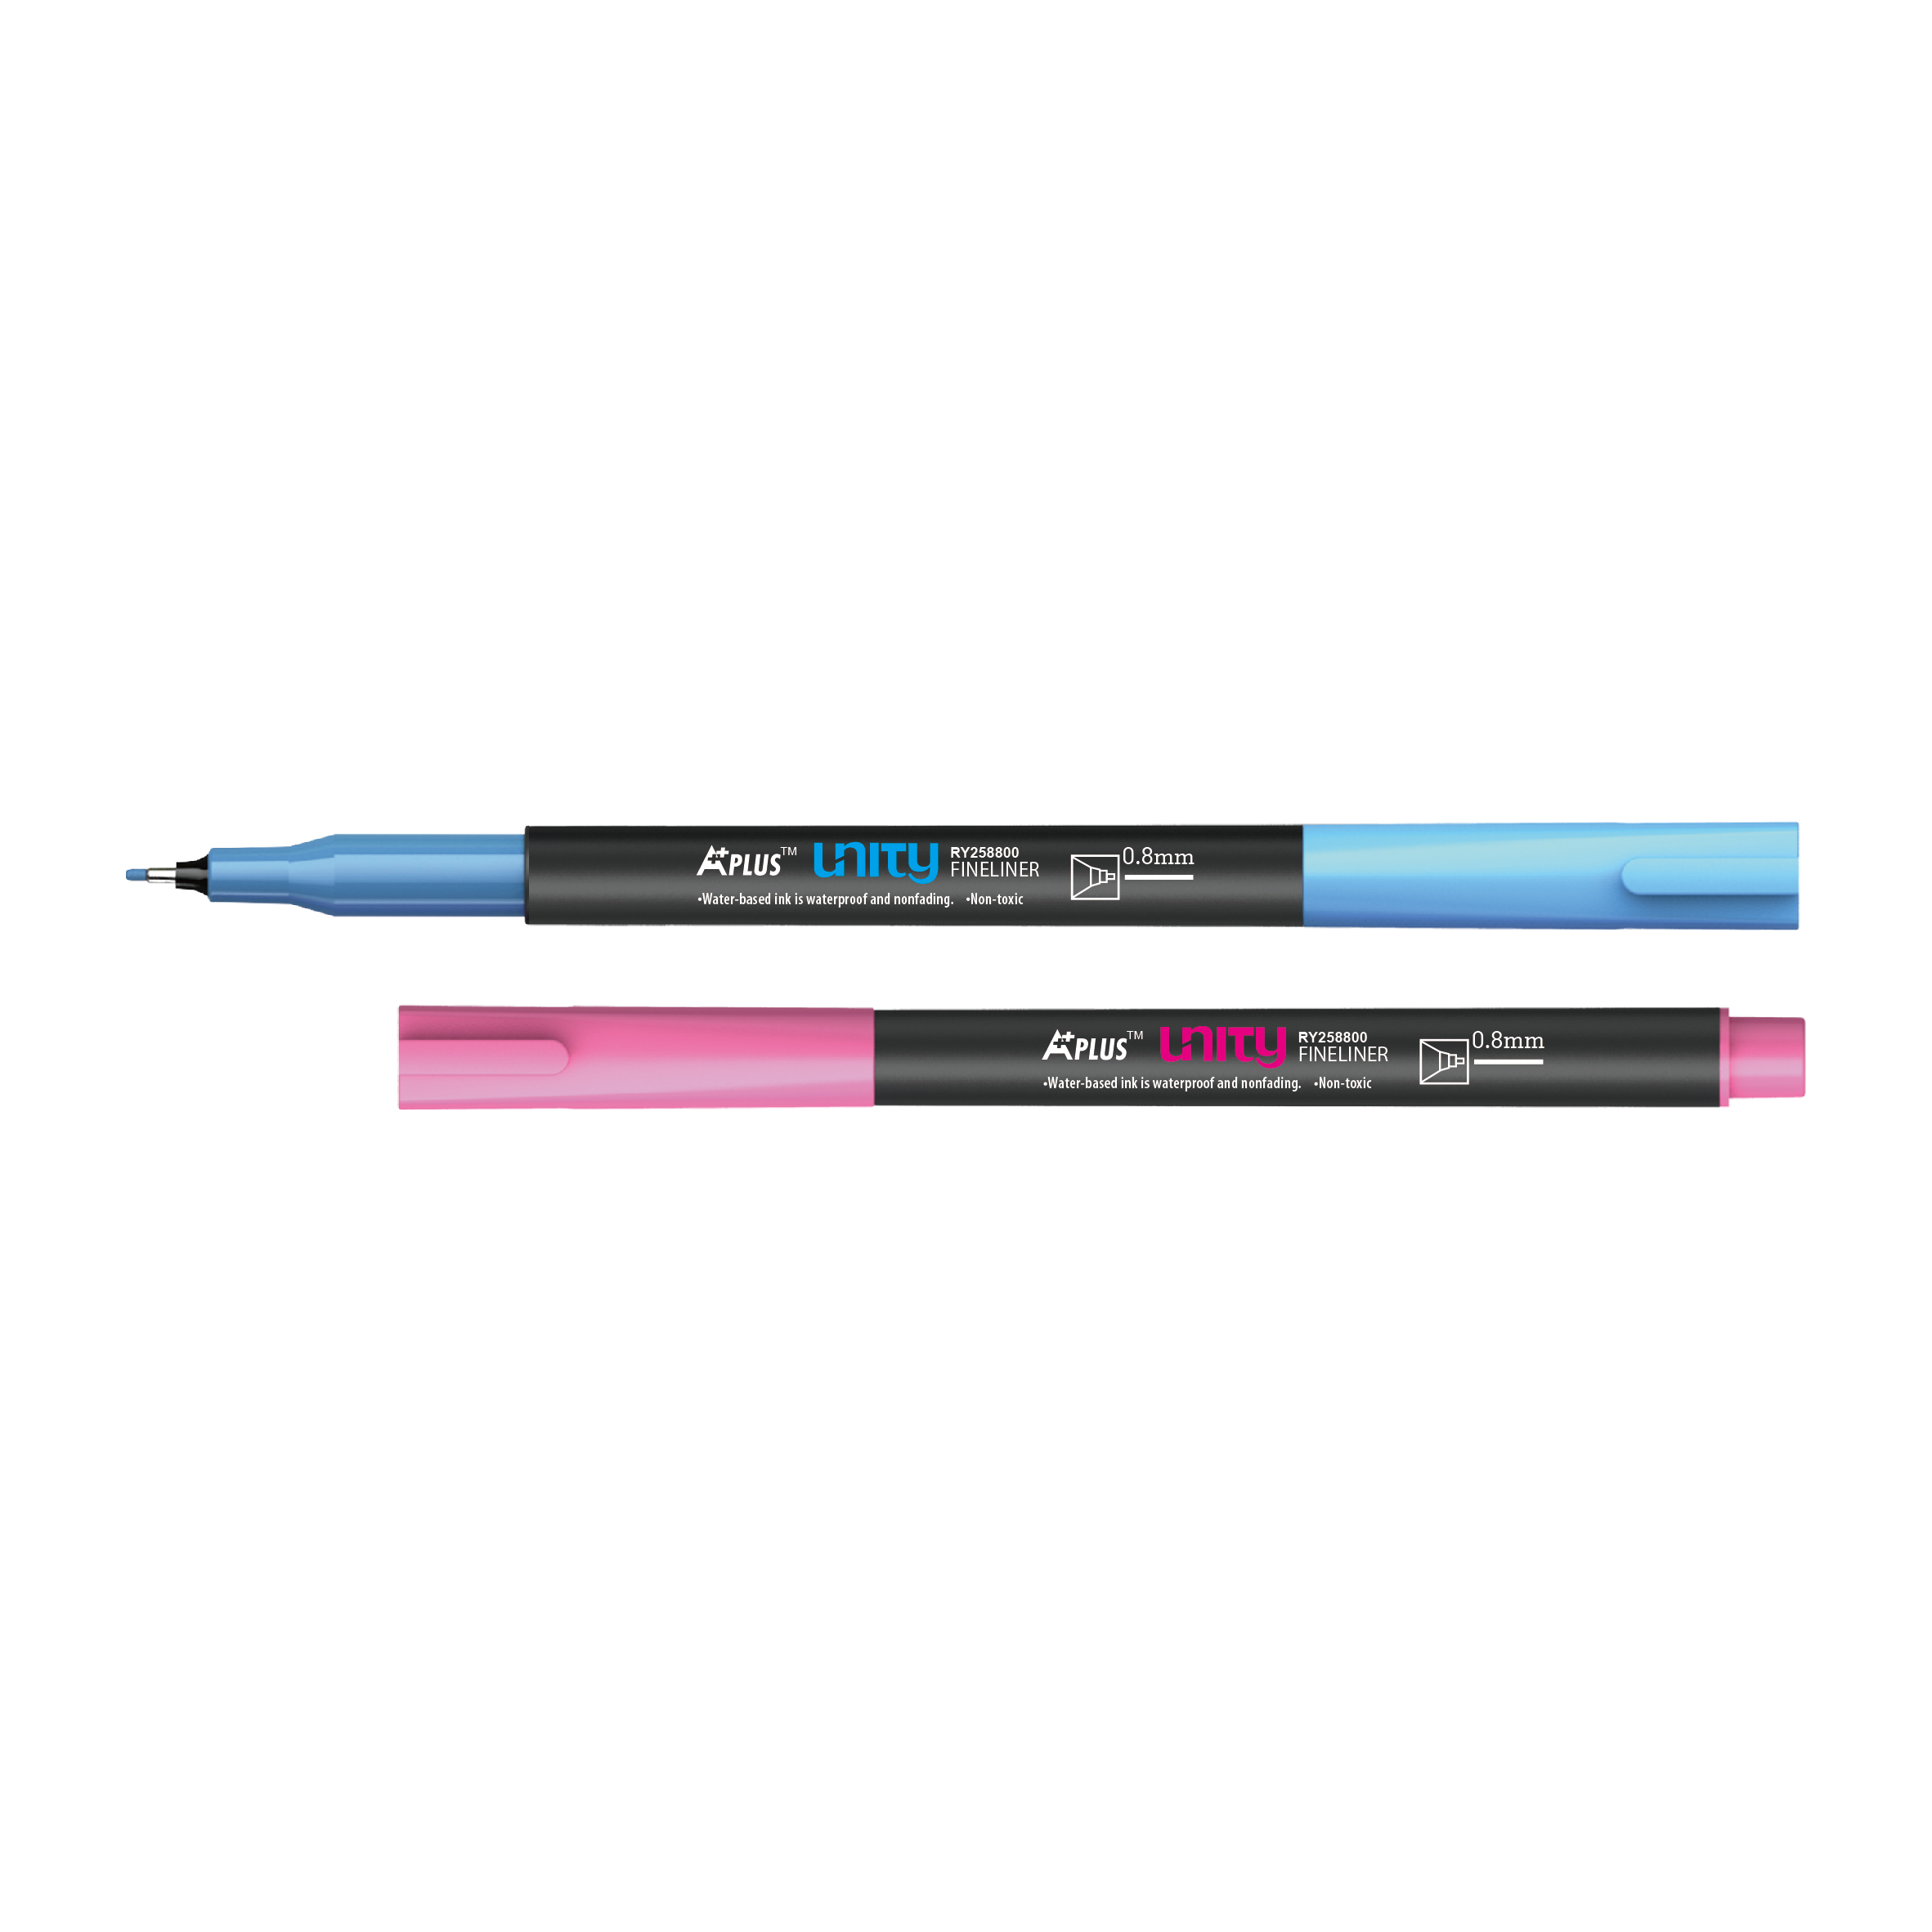 Metal Resin Tip Multi Color Fine liner pen in Office Home School